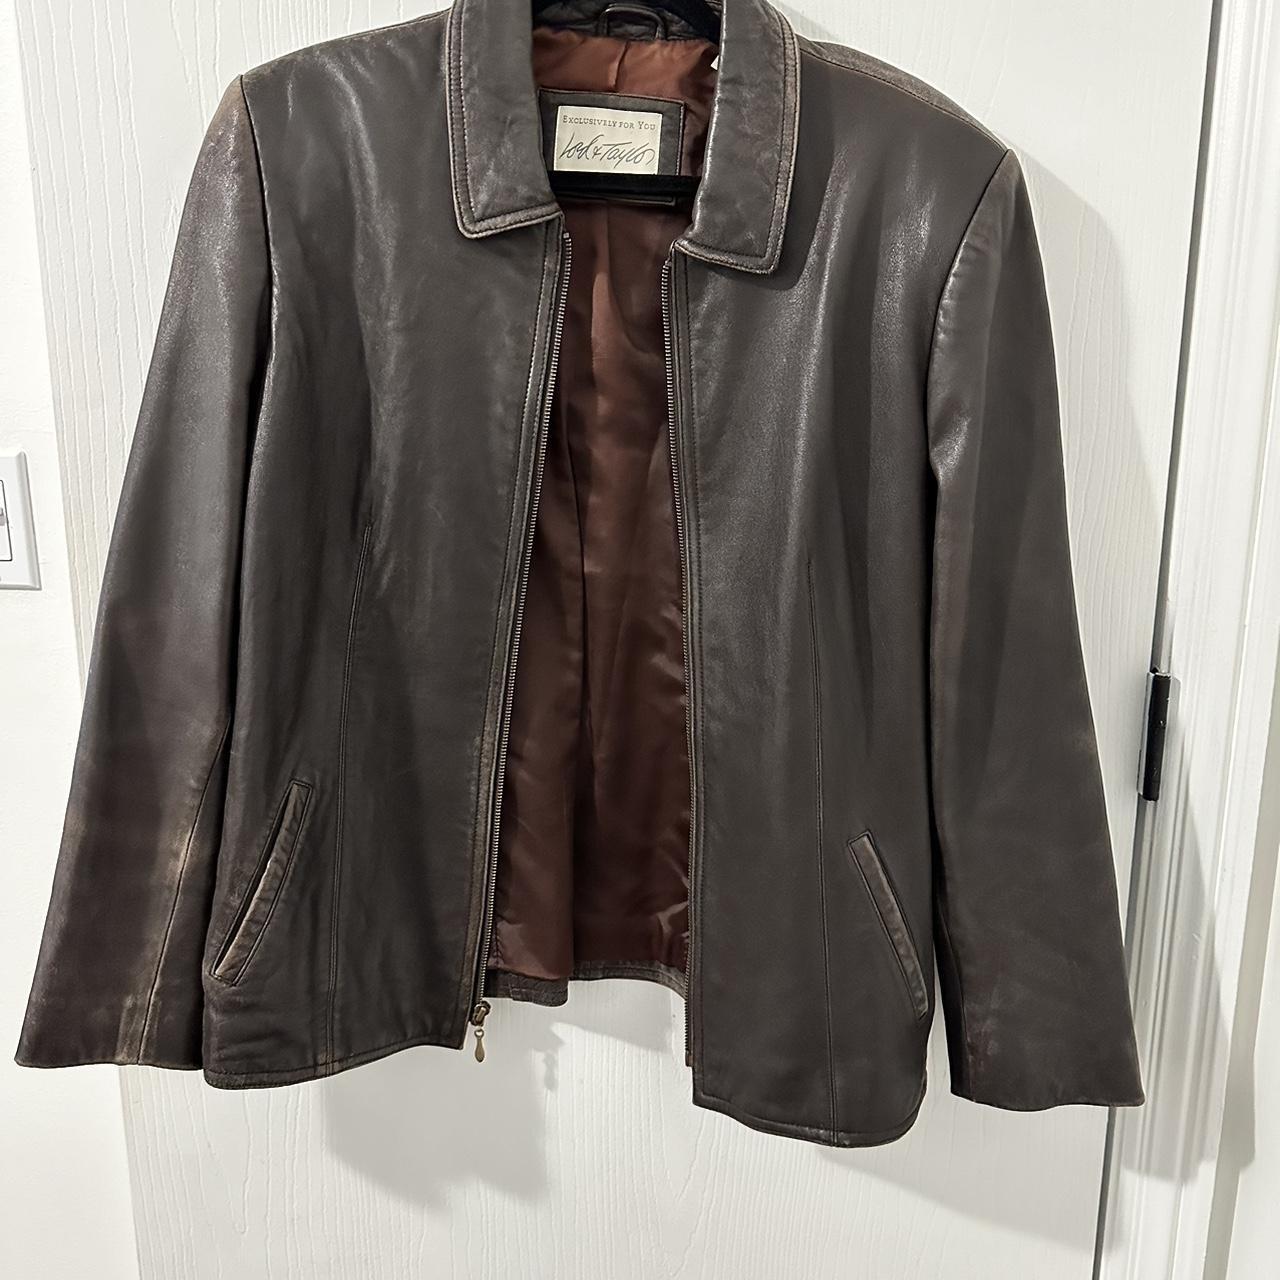 Distressed brown leather jacket Comfortable jacket... - Depop